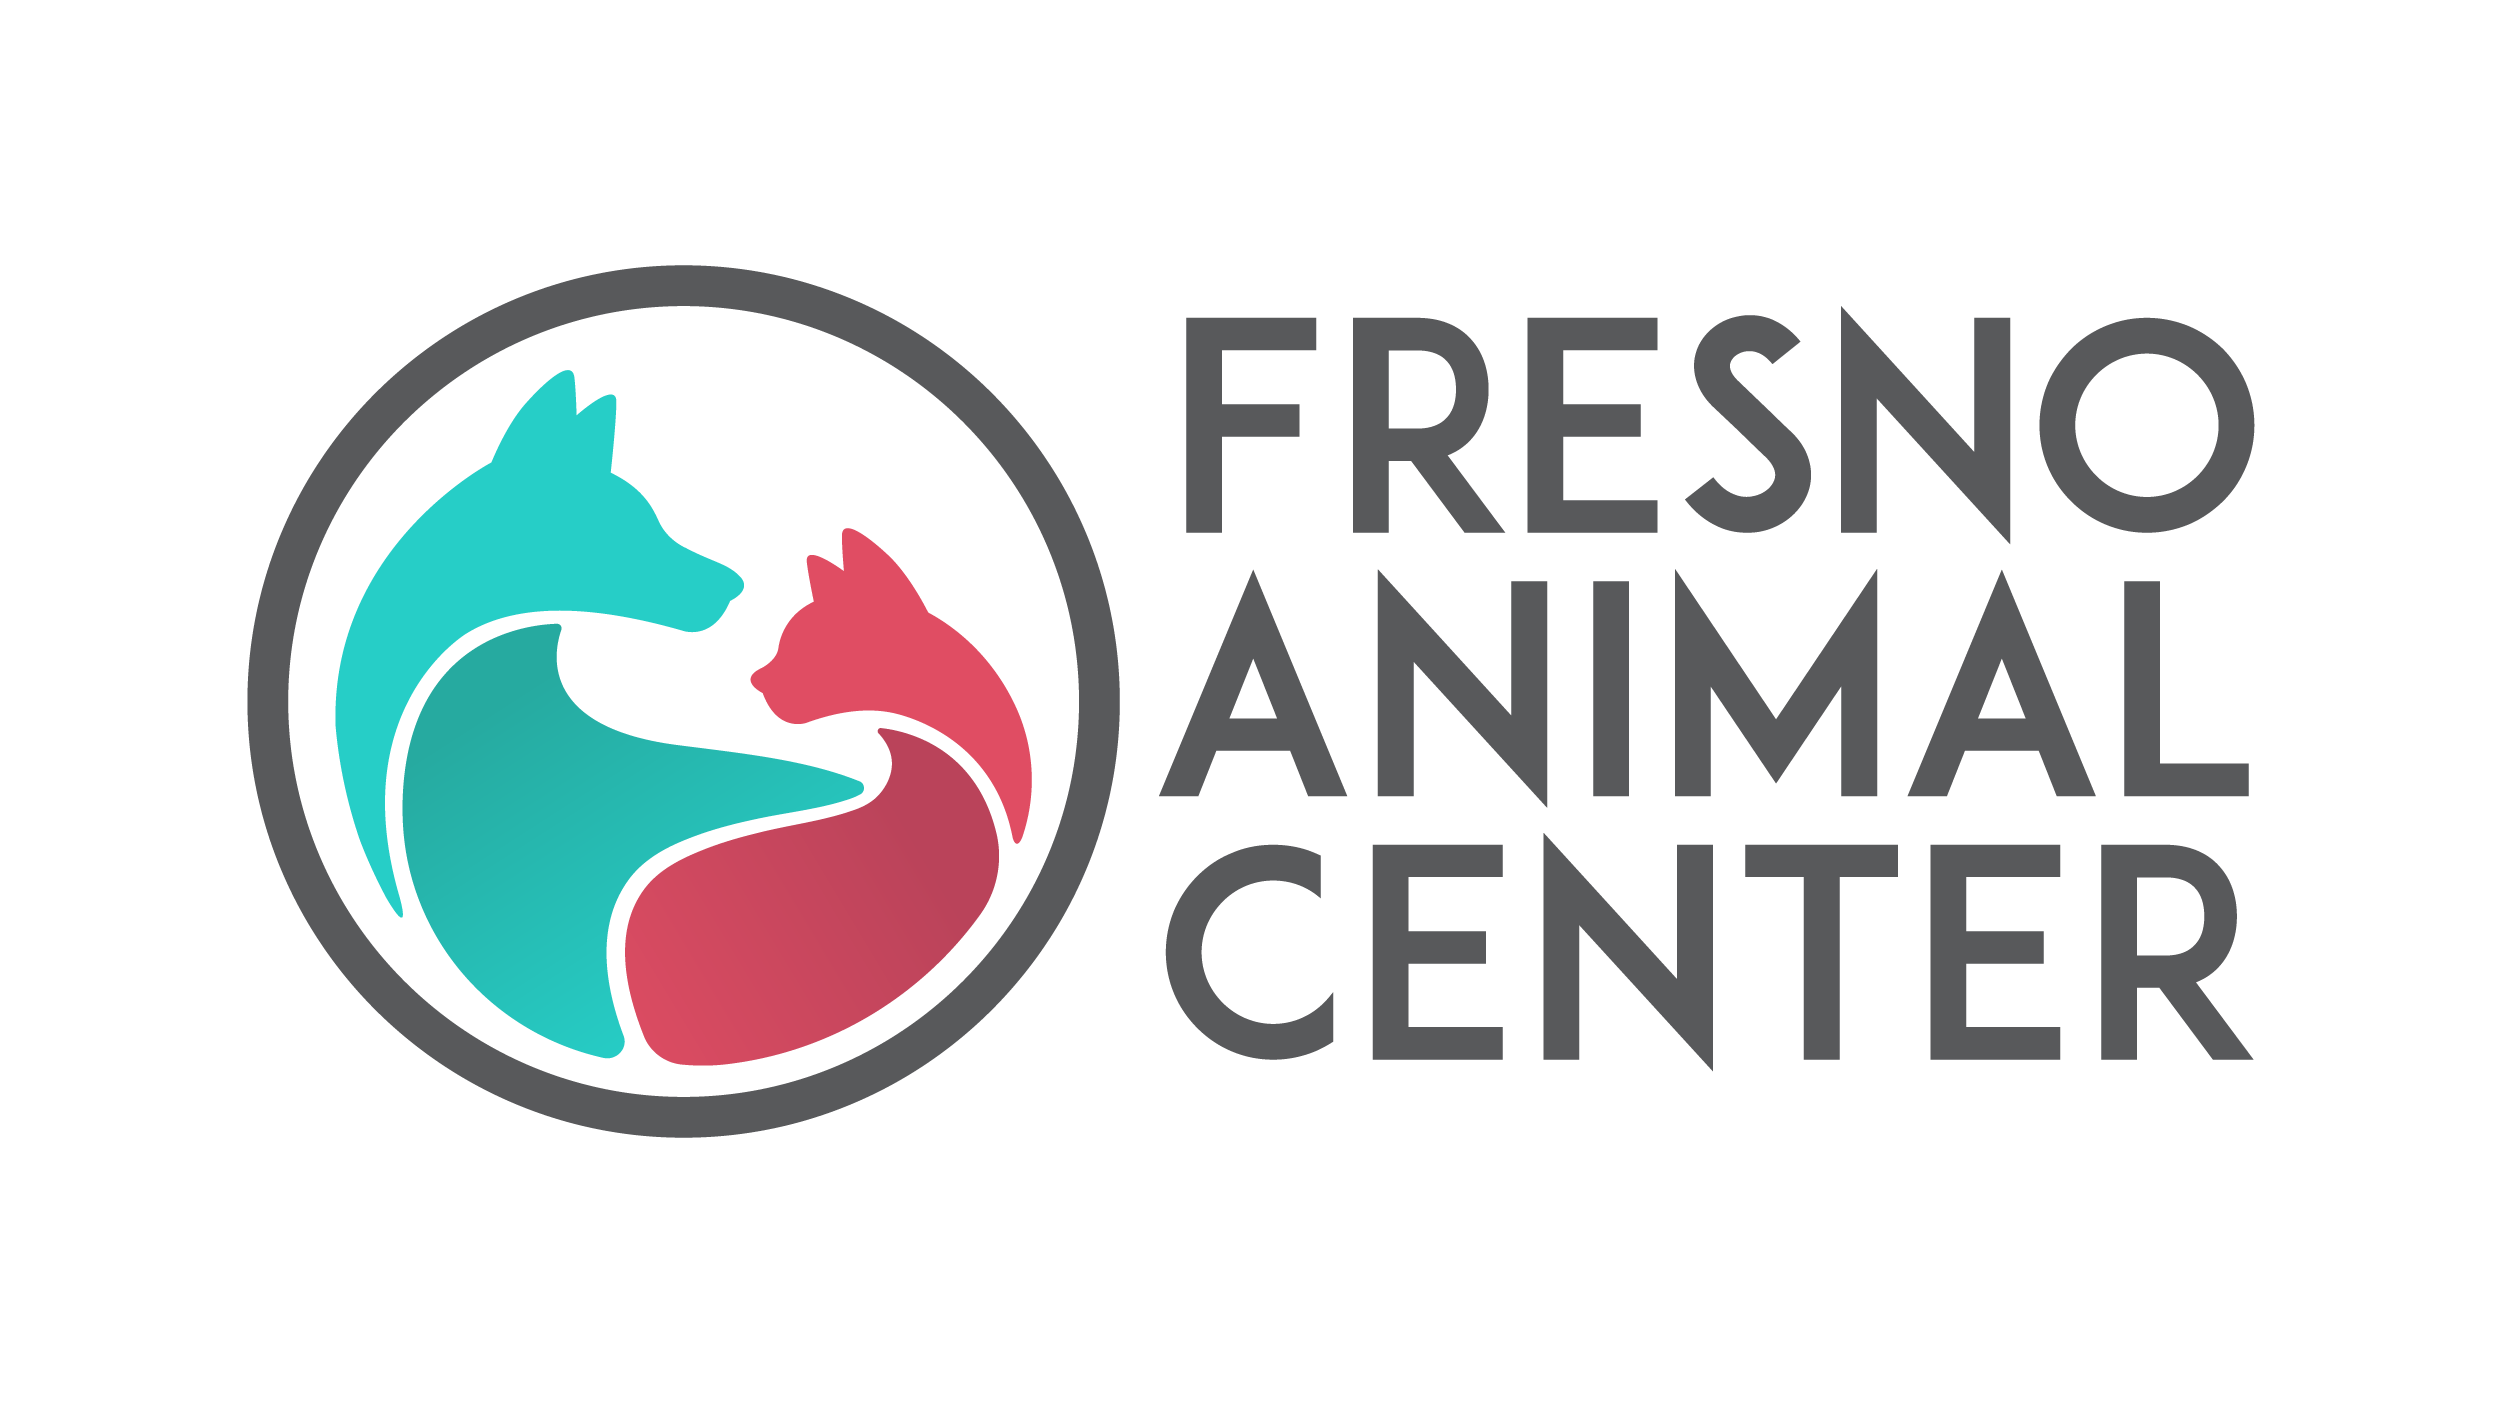 fresno animal center logo